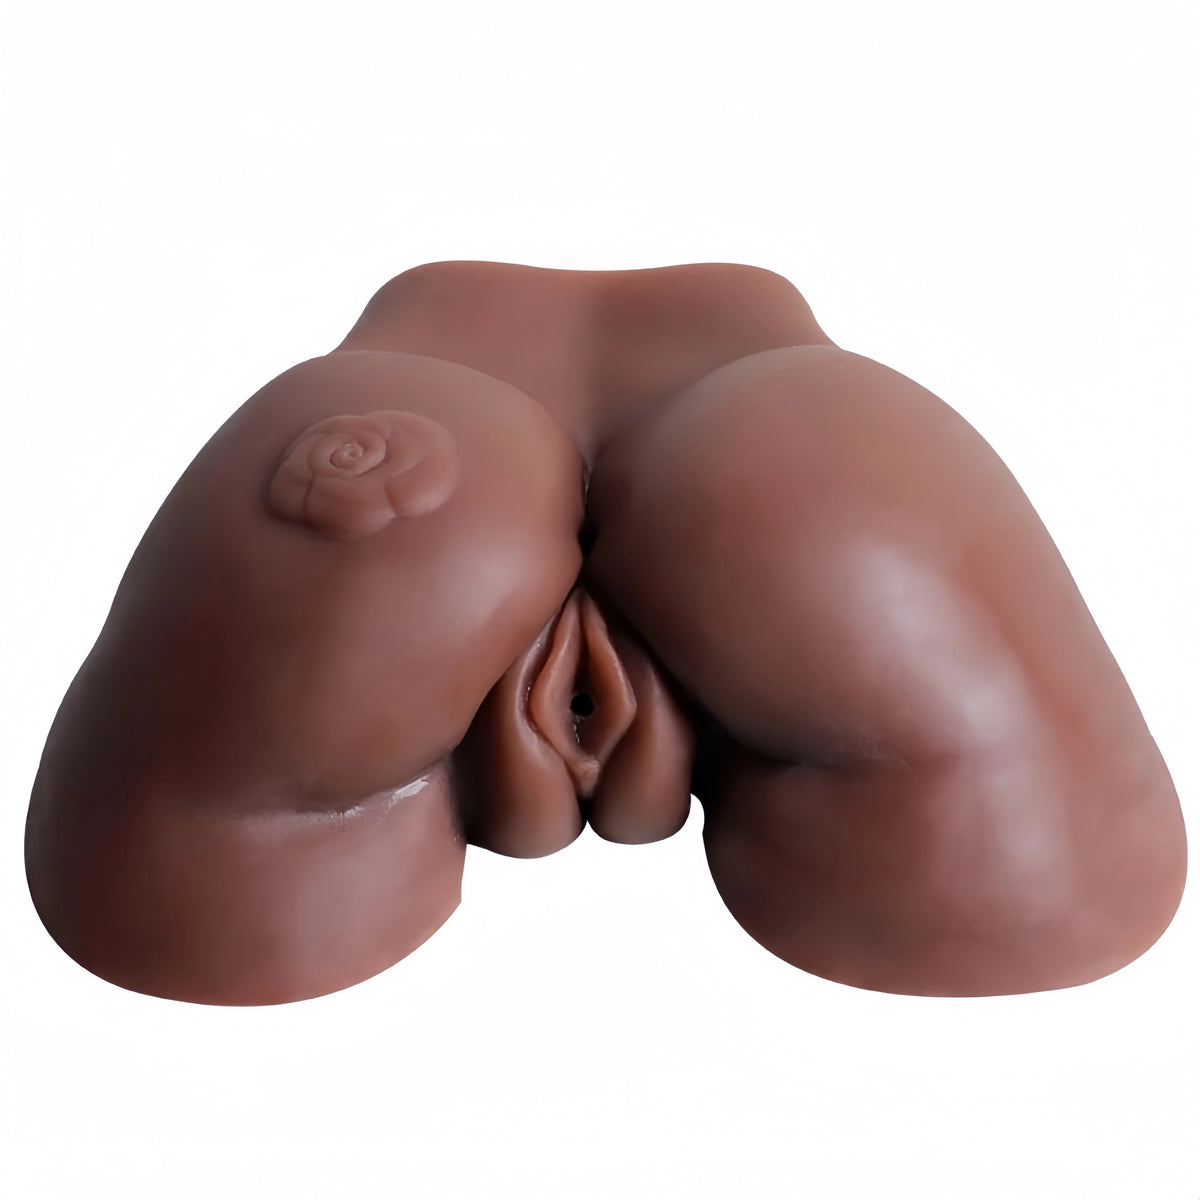 A546 (4lb) Lightweight Realistic Masturbator|Fake Black Butt Sex Toy